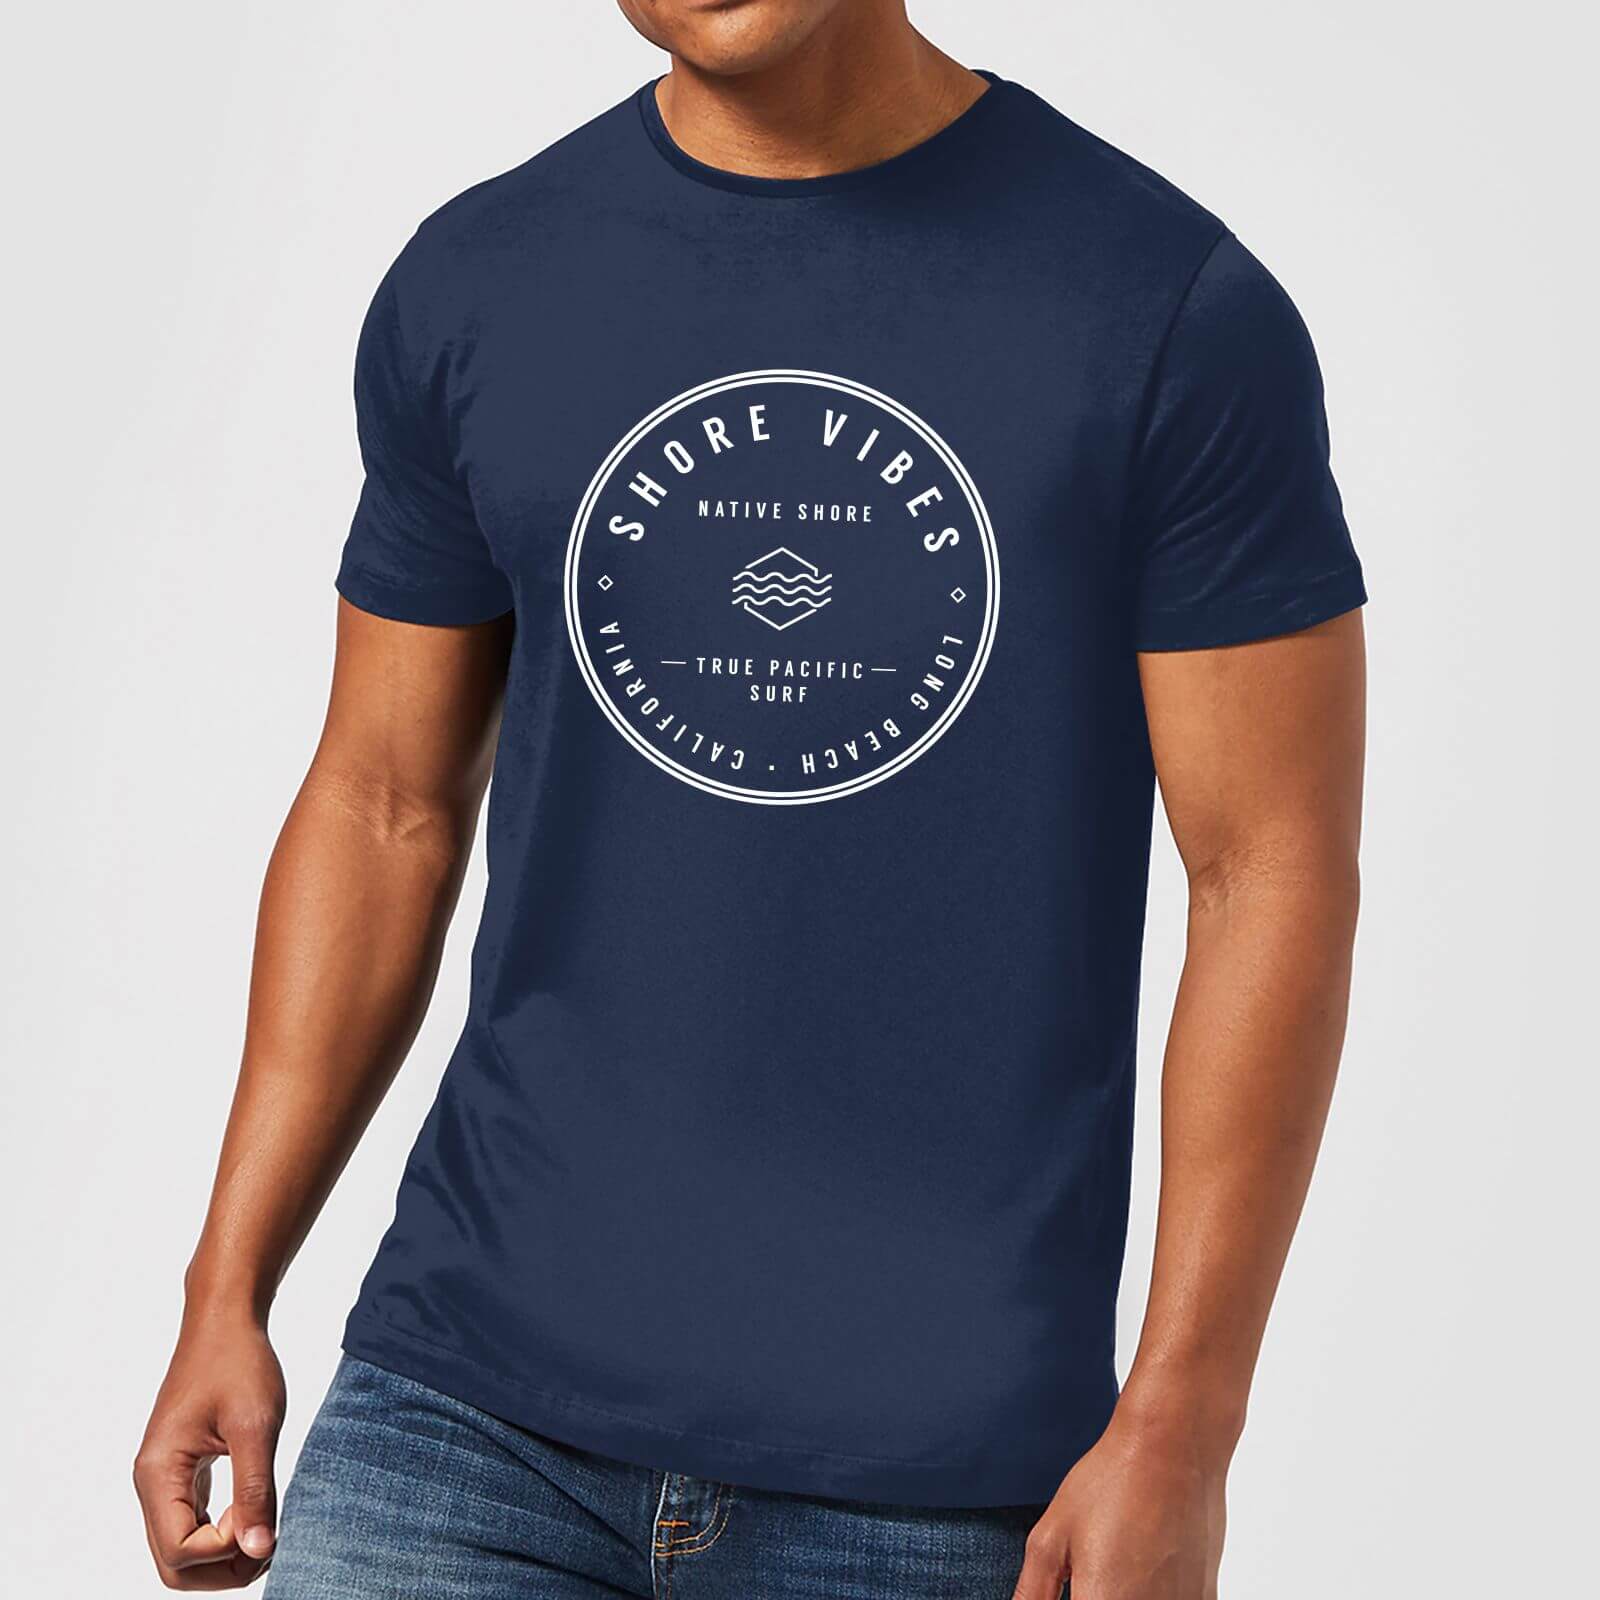 Native Shore Men's Shore Vibes T-Shirt - Navy - M - Navy